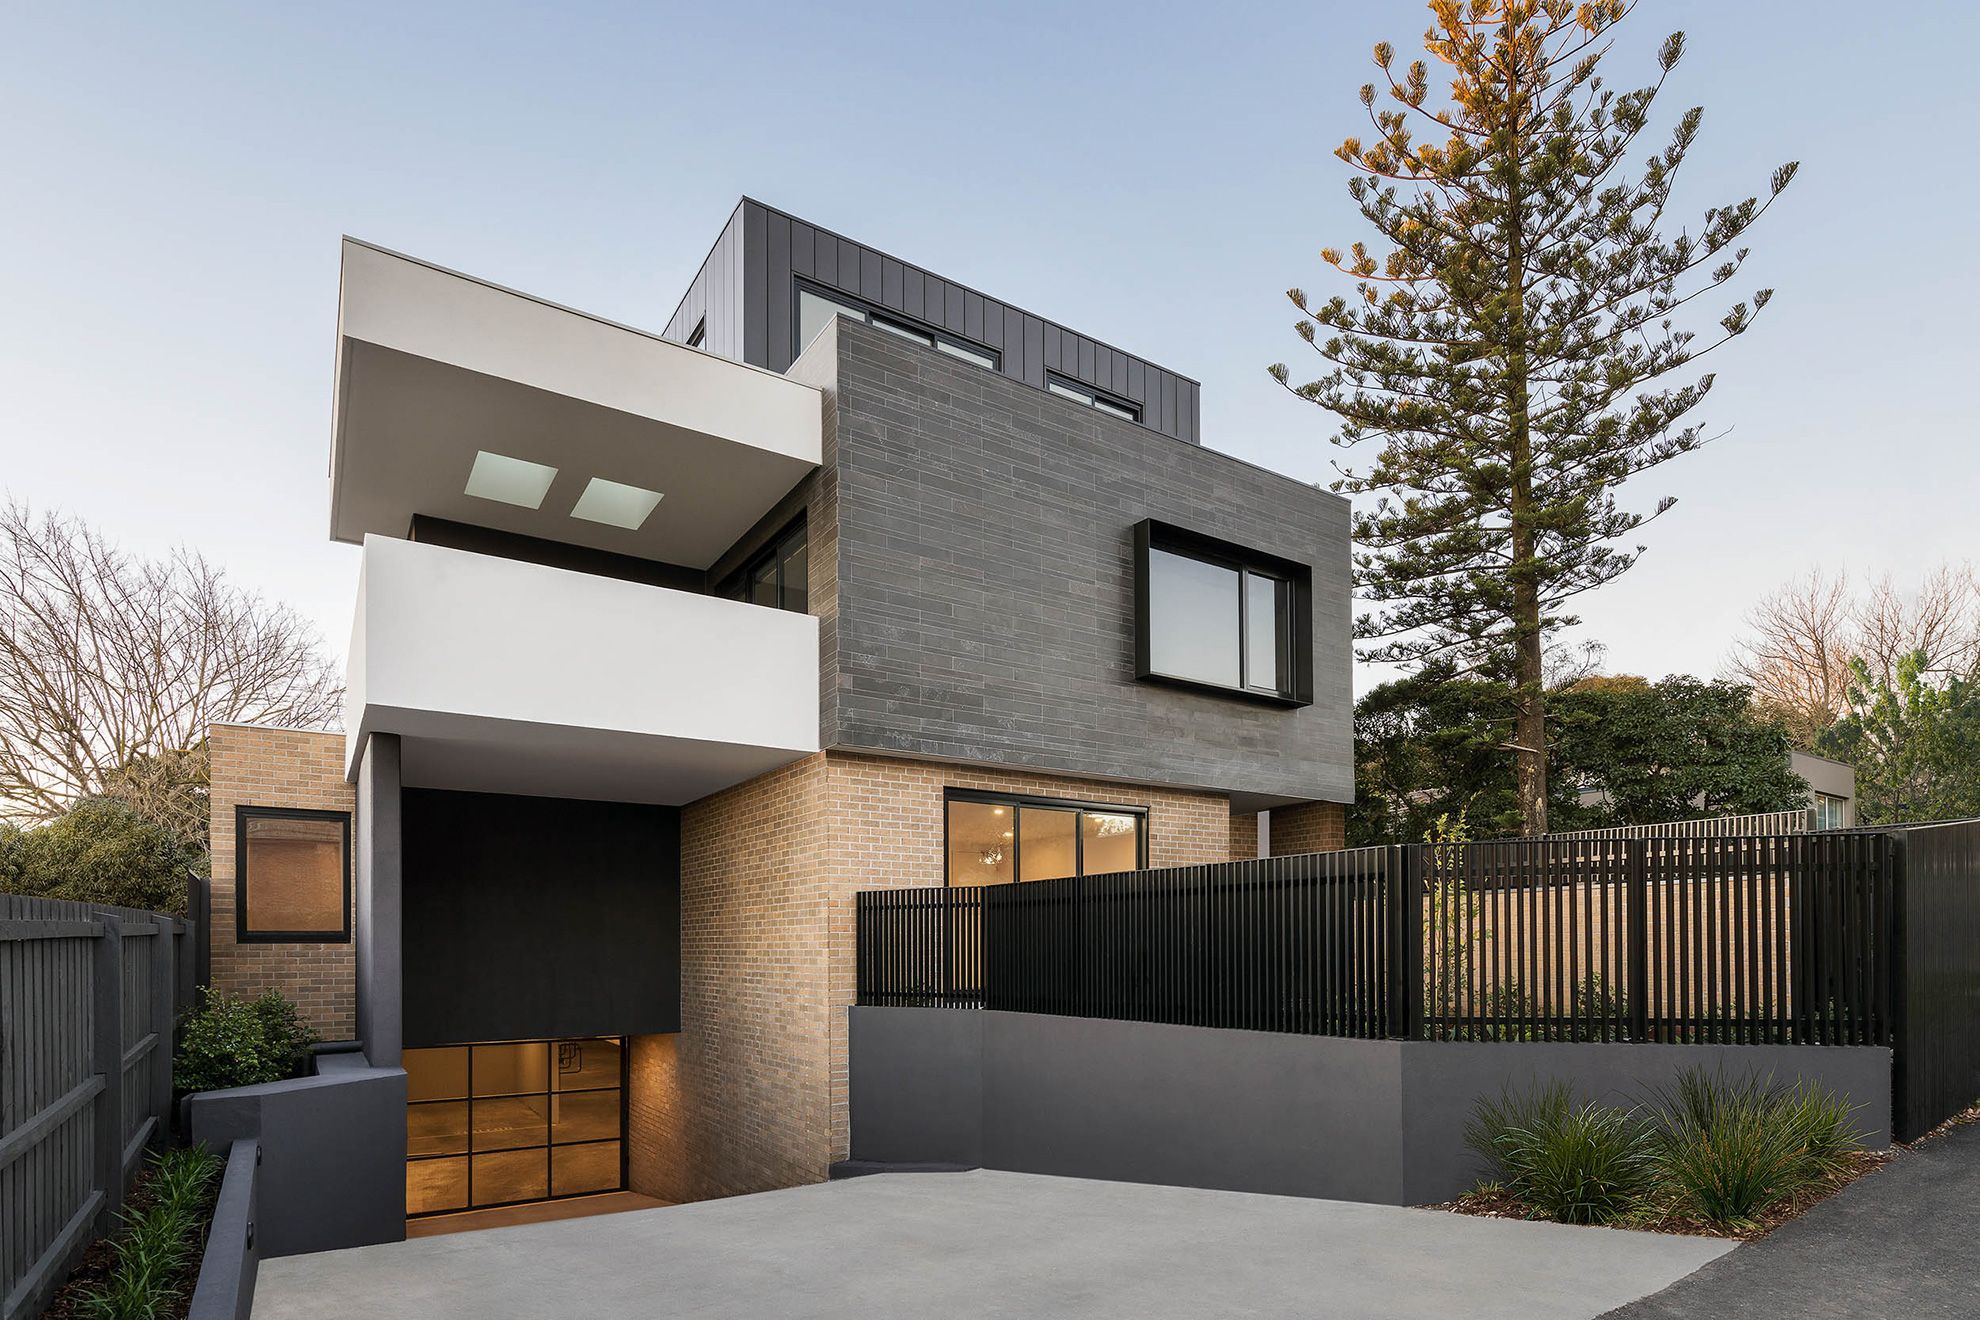 exterior-facade-angle-view-kew-apartment-development-ckairouz-architects